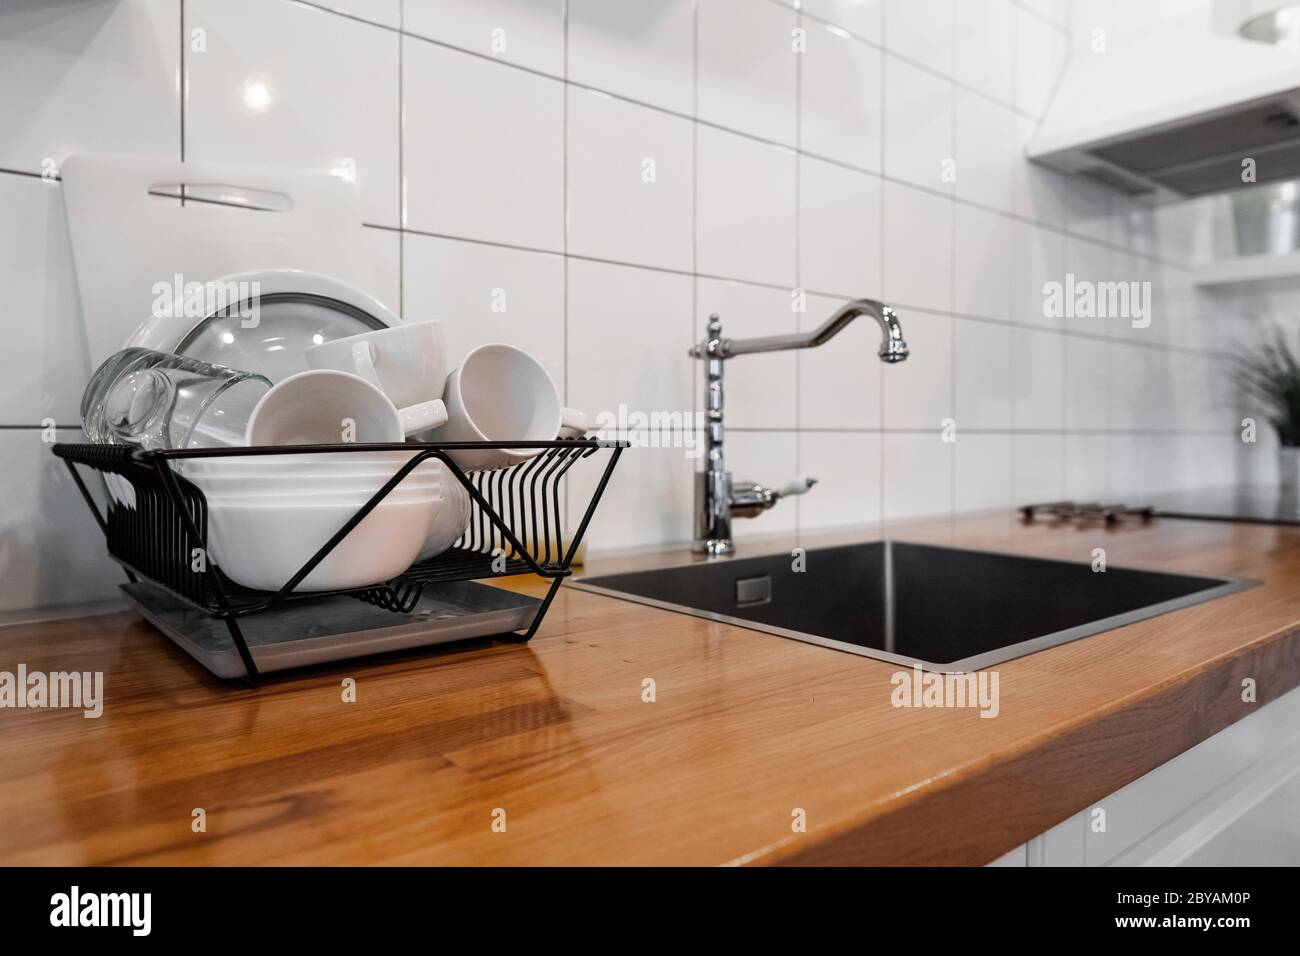 Kitchen design: get the dish rack off the counter. - VICTORIA ELIZABETH  BARNES